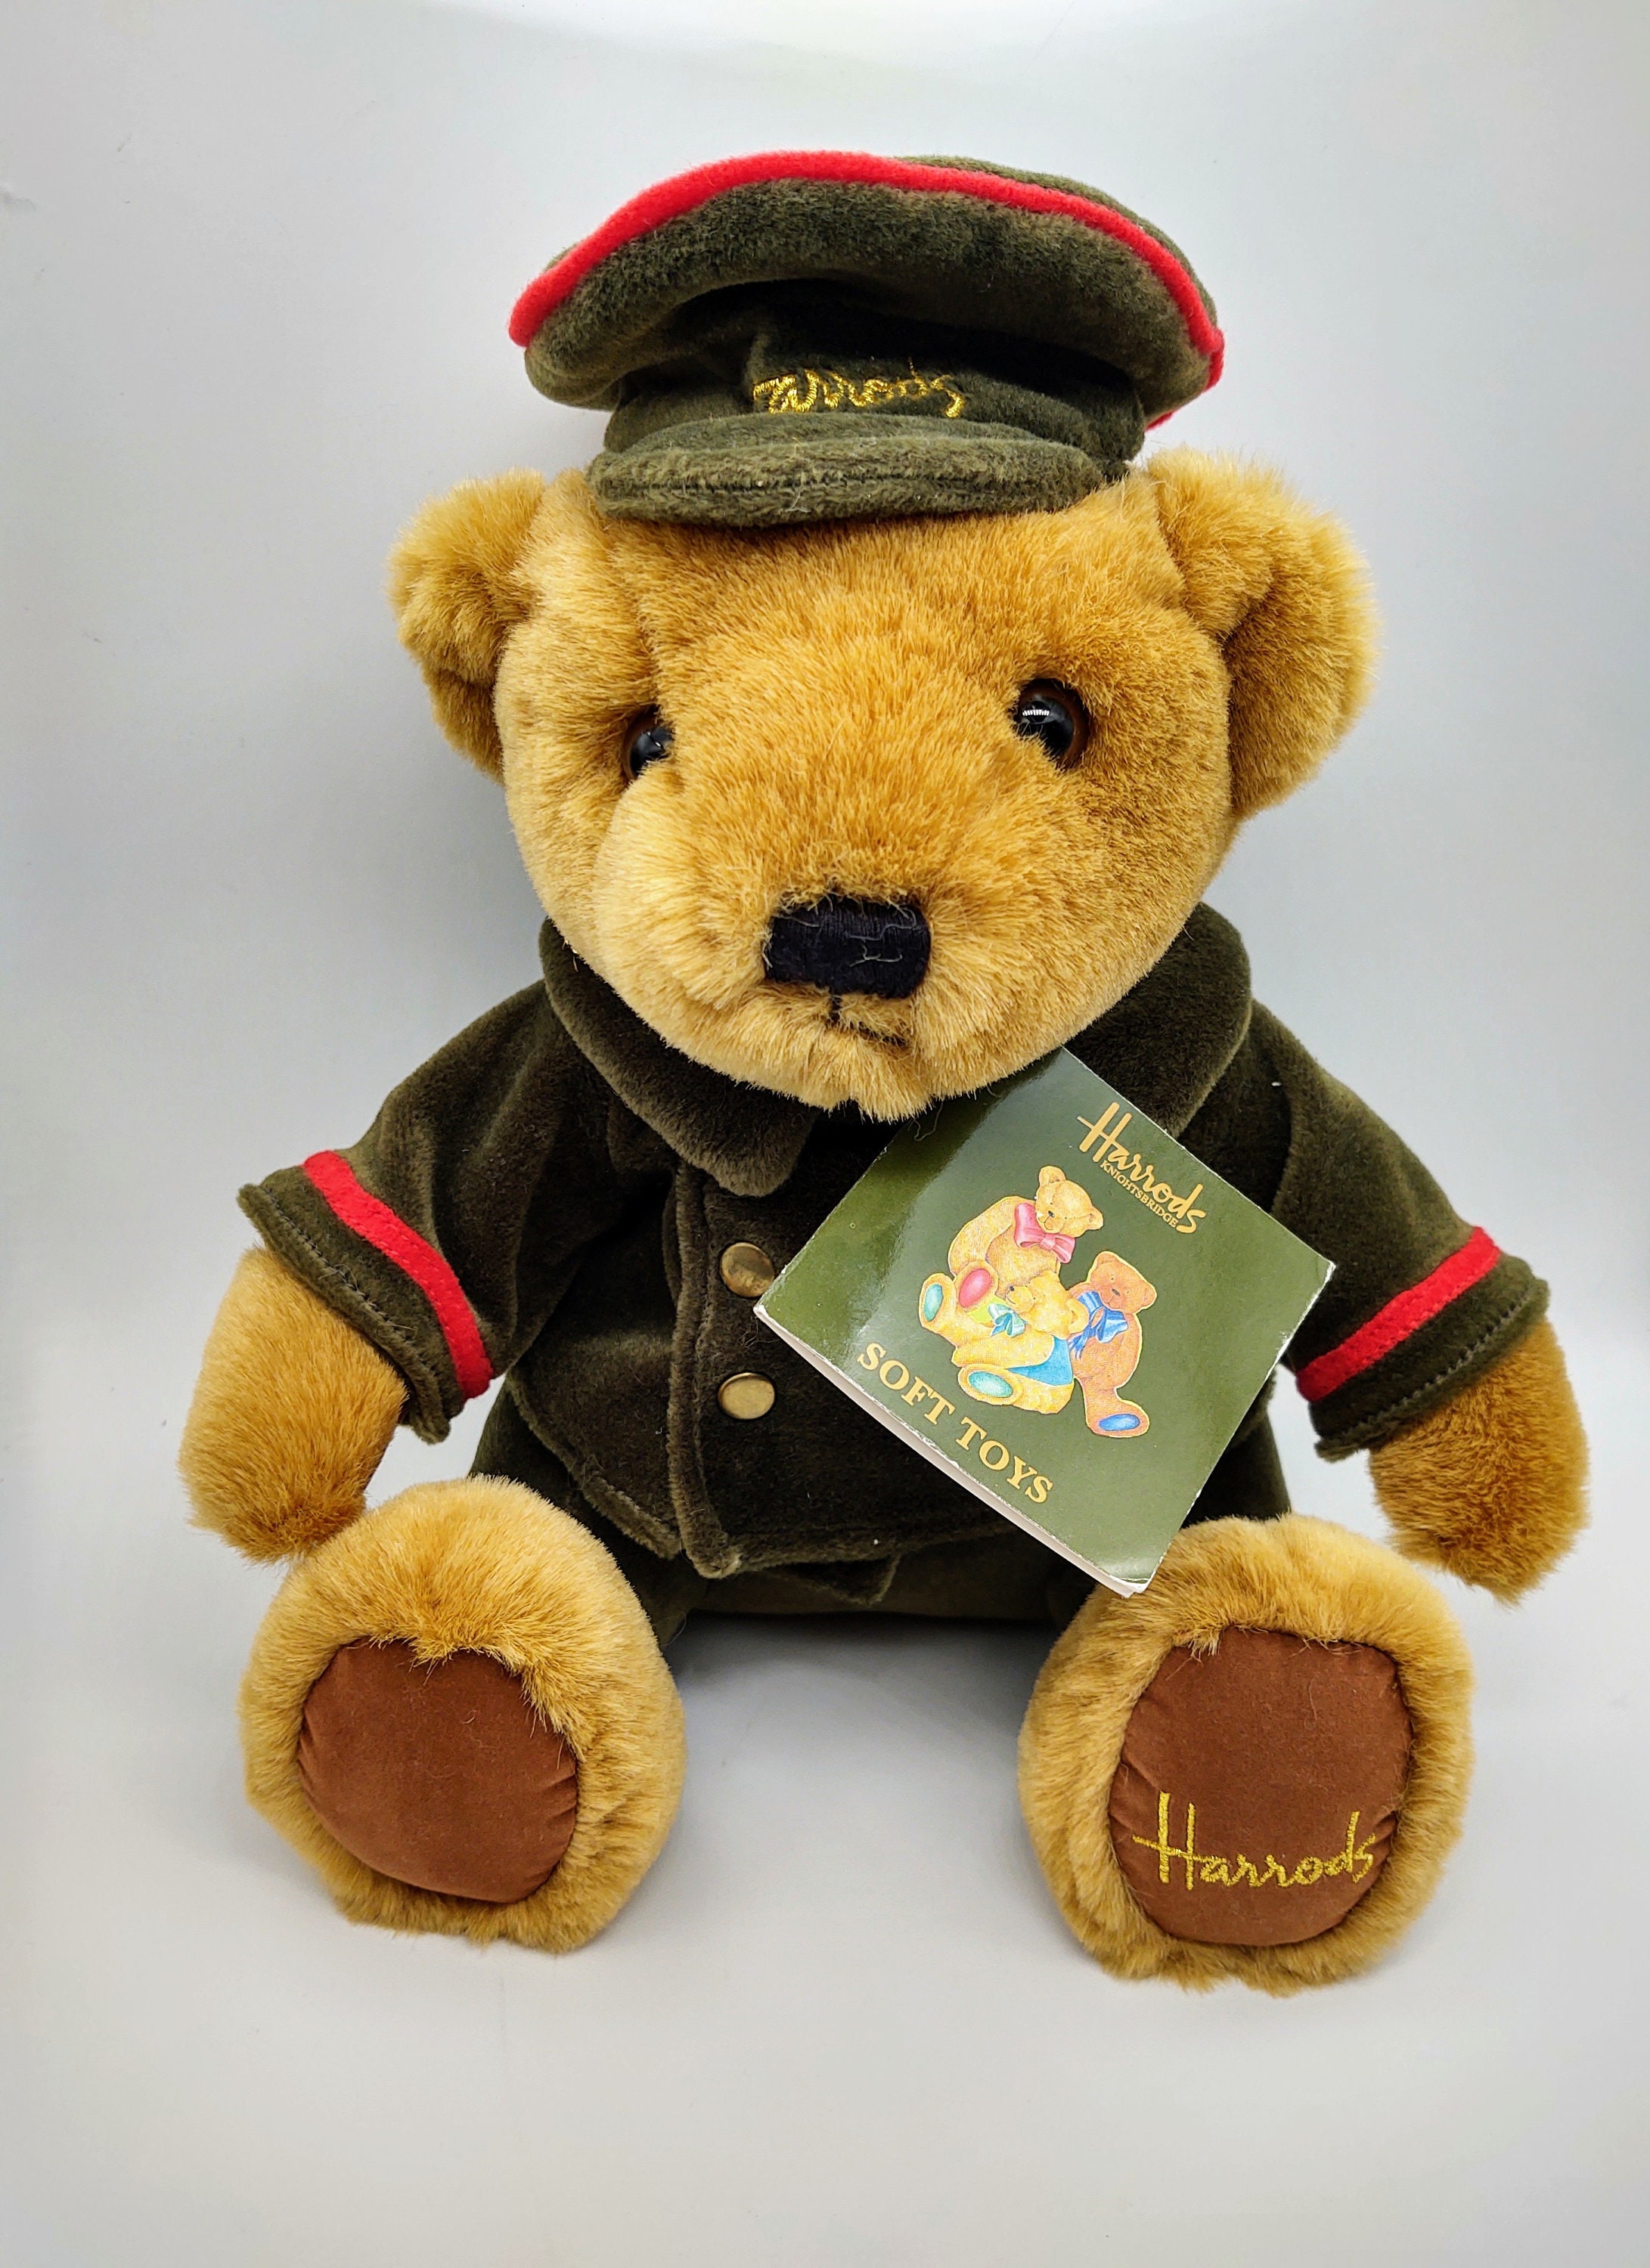 Harrods Harrods 2004 Limited Edition Thomas Christmas 13” Teddy Bear Soft Plush Toy 